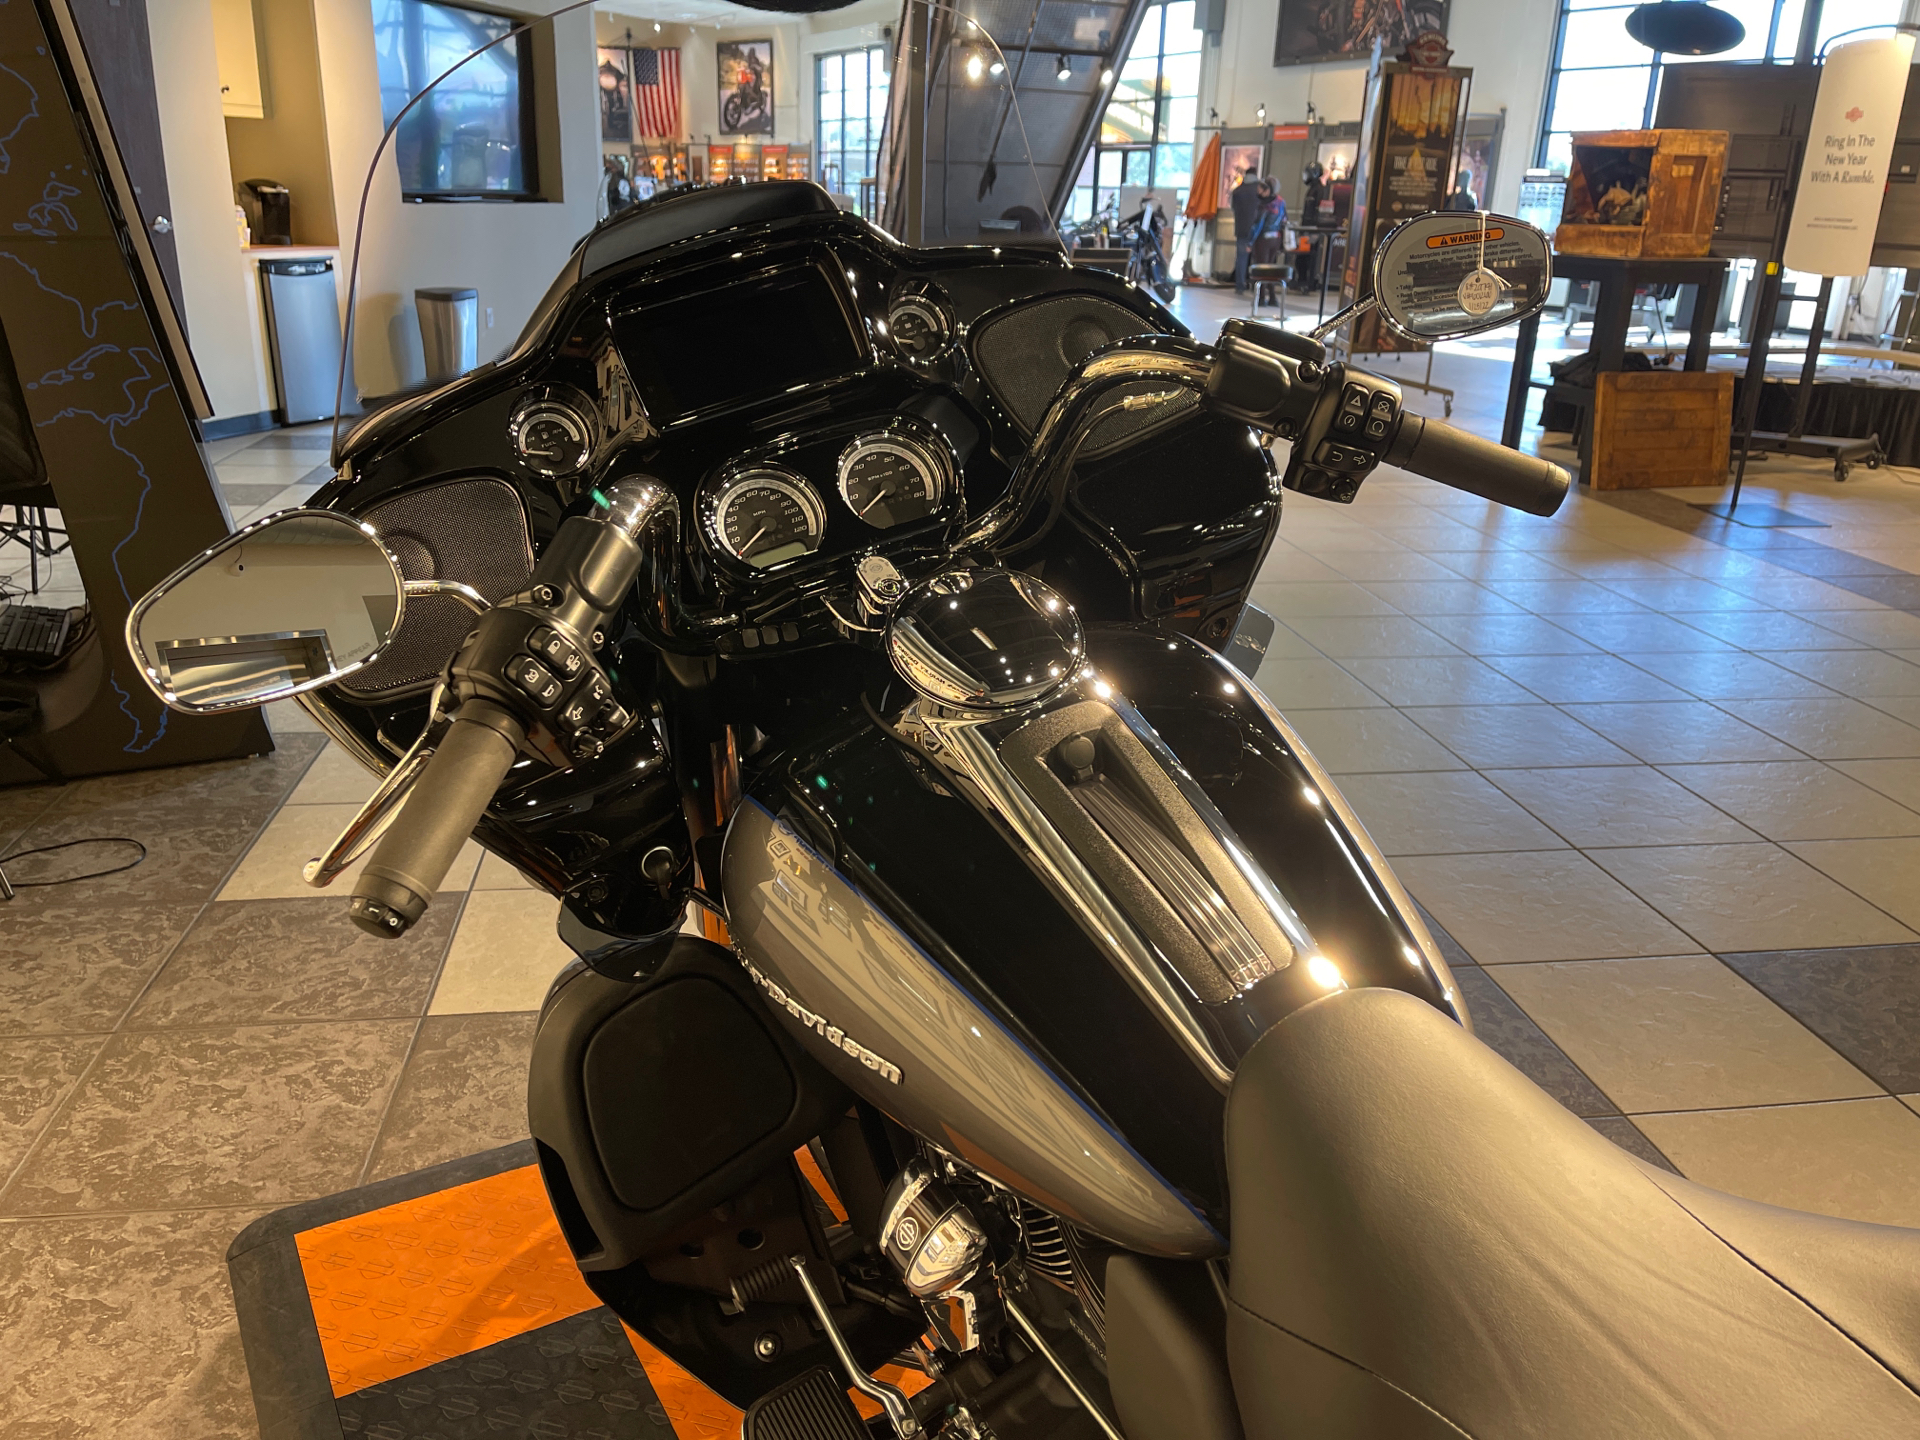 2022 Harley-Davidson Road Glide® Limited in Baldwin Park, California - Photo 9